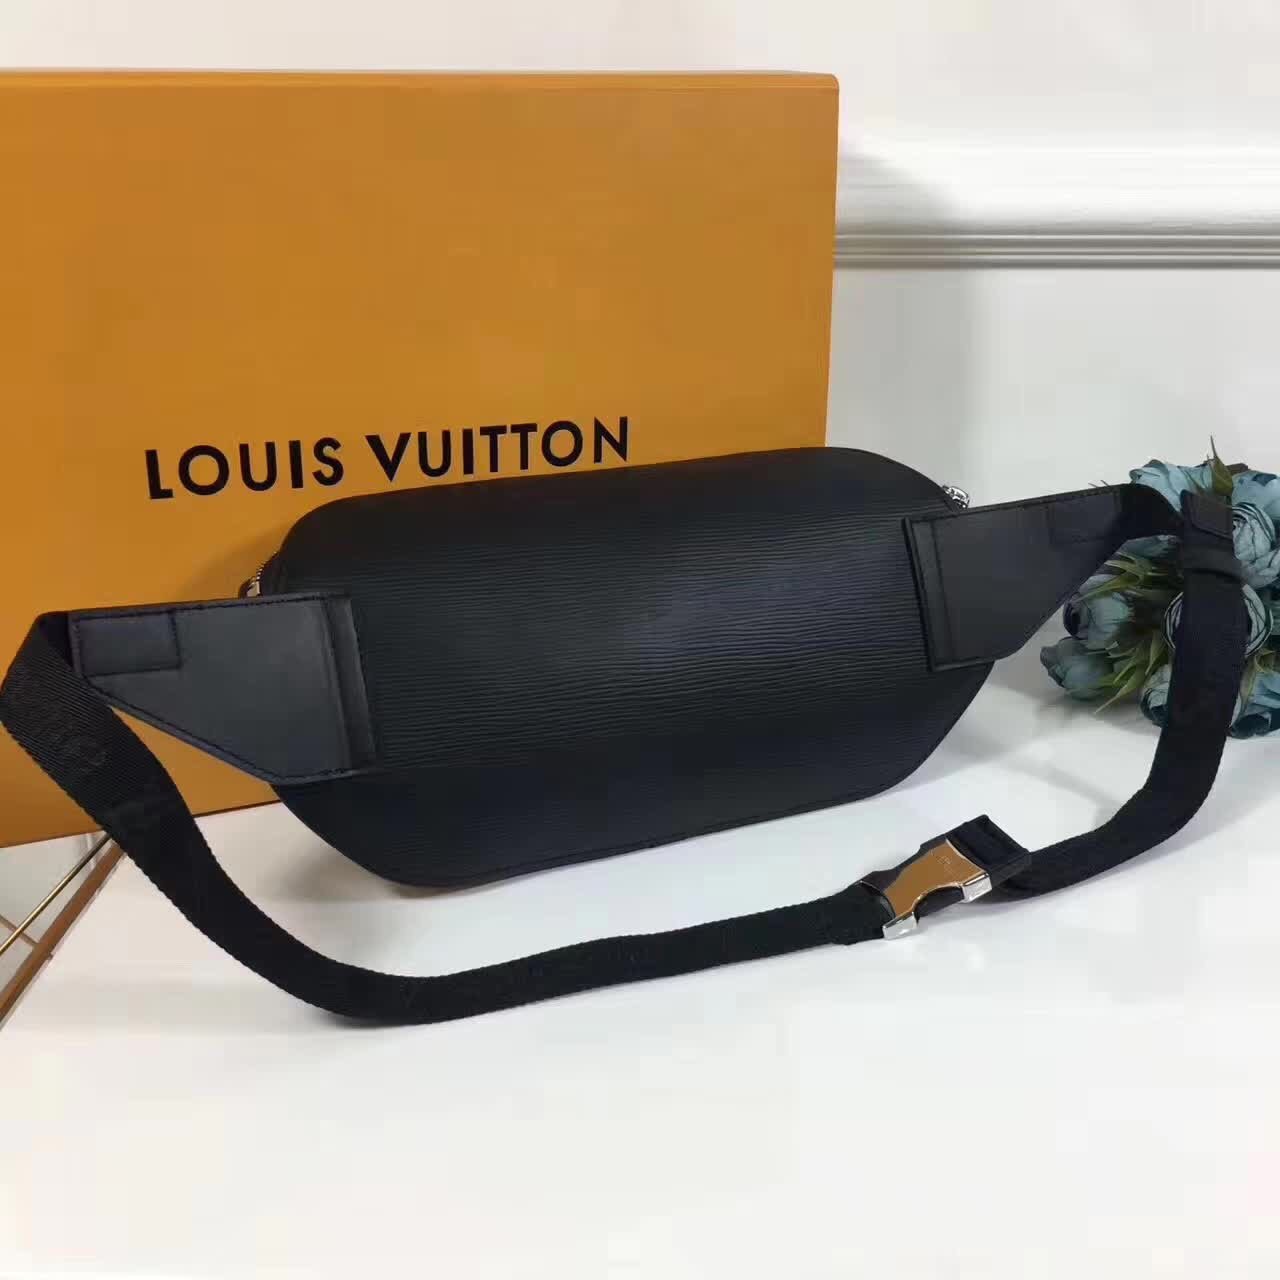 Louis Vuitton, Bags, 2 Supreme Lv Side Bags